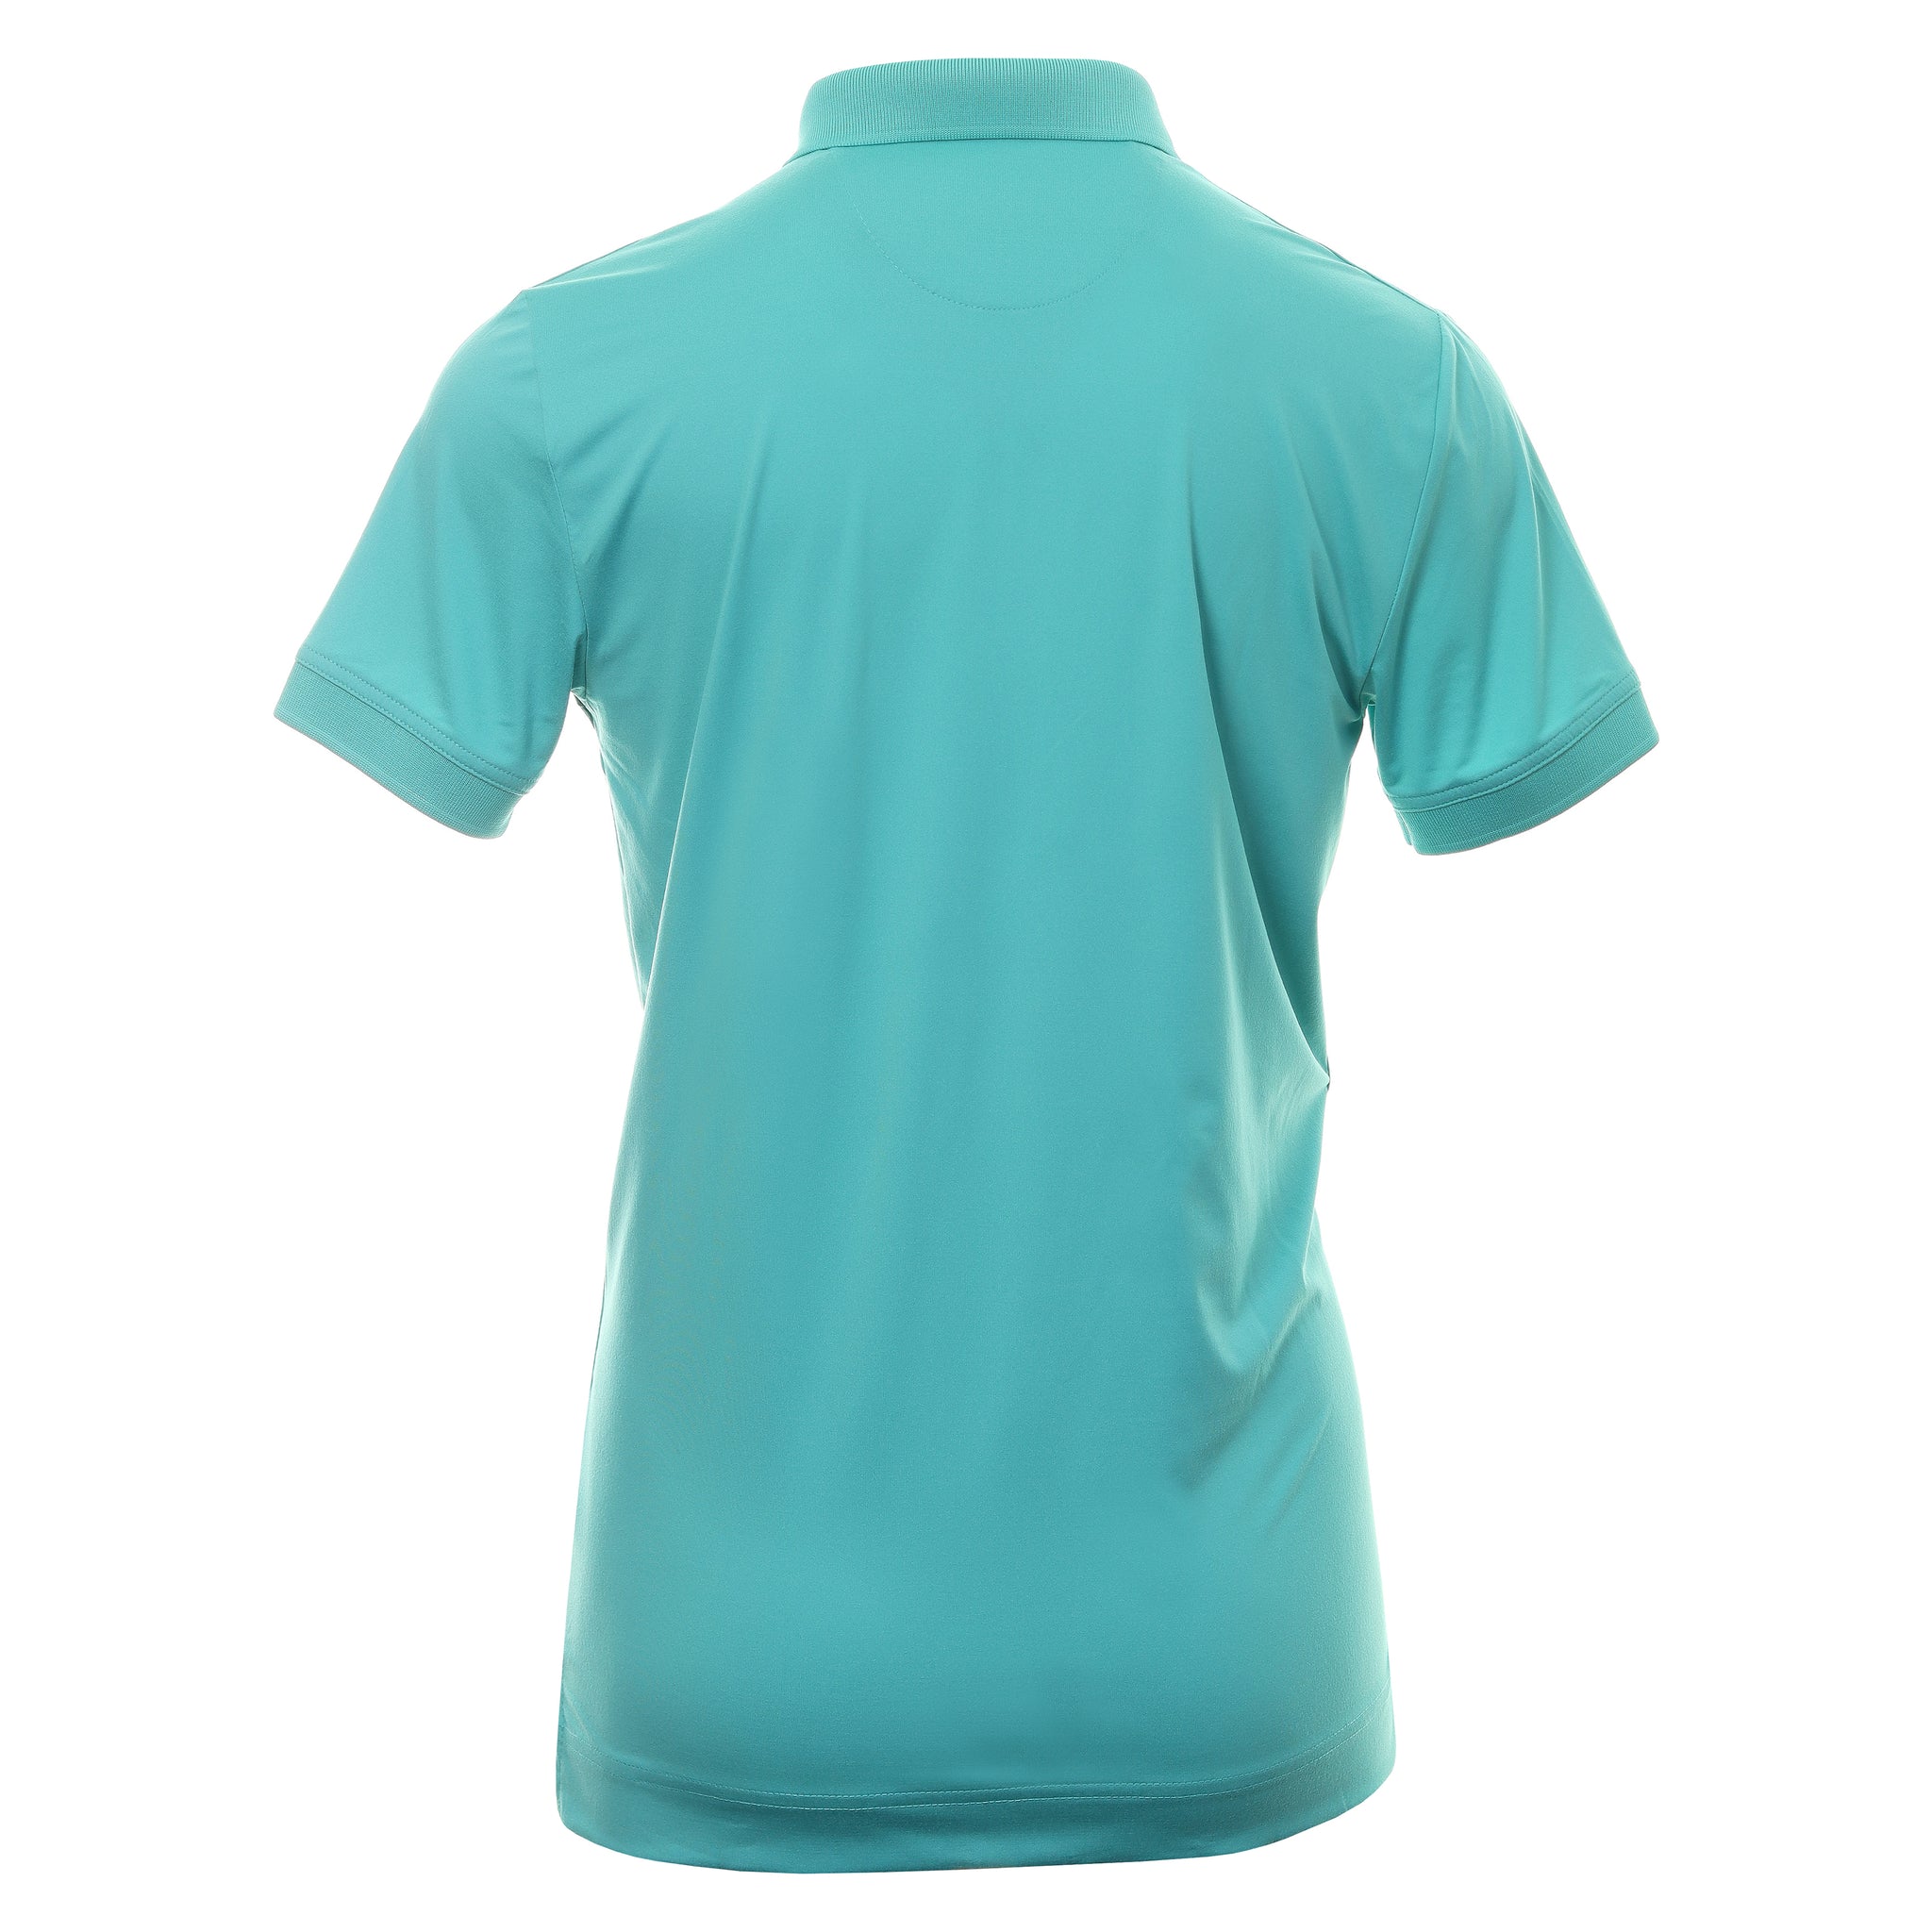 callaway-golf-x-series-solid-ribbed-shirt-cgksb011-baltic-399